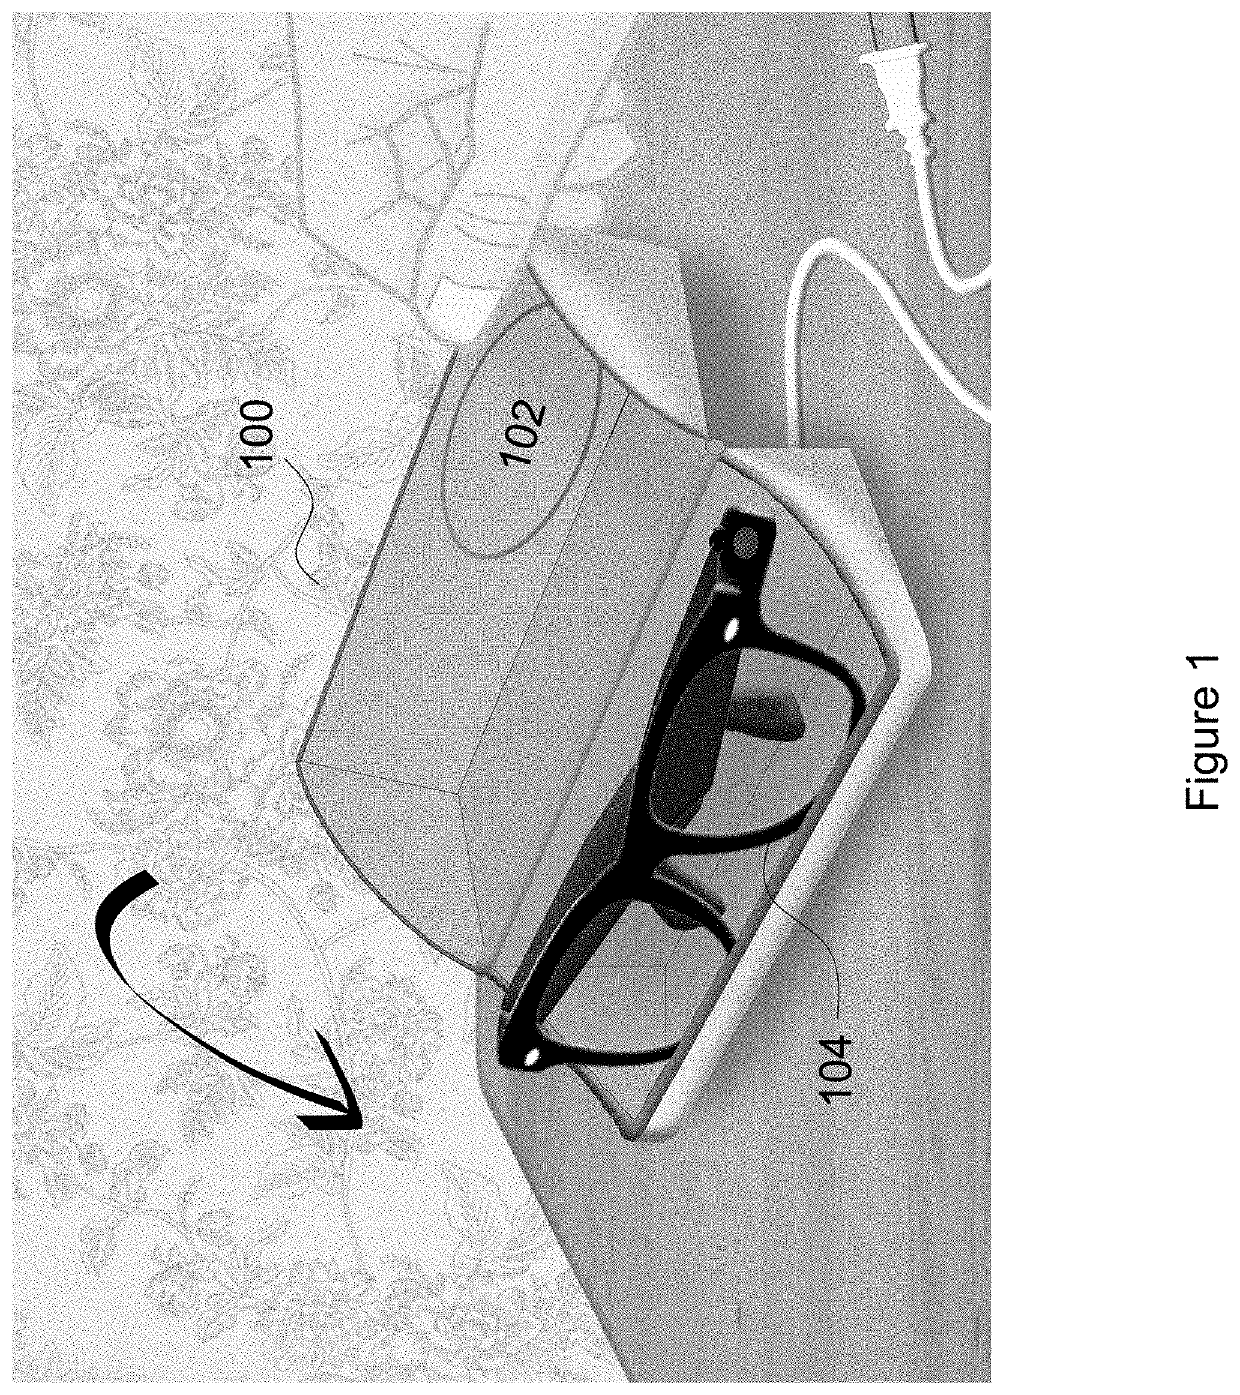 Methods and apparatus regarding electronic eyewear applicable for seniors